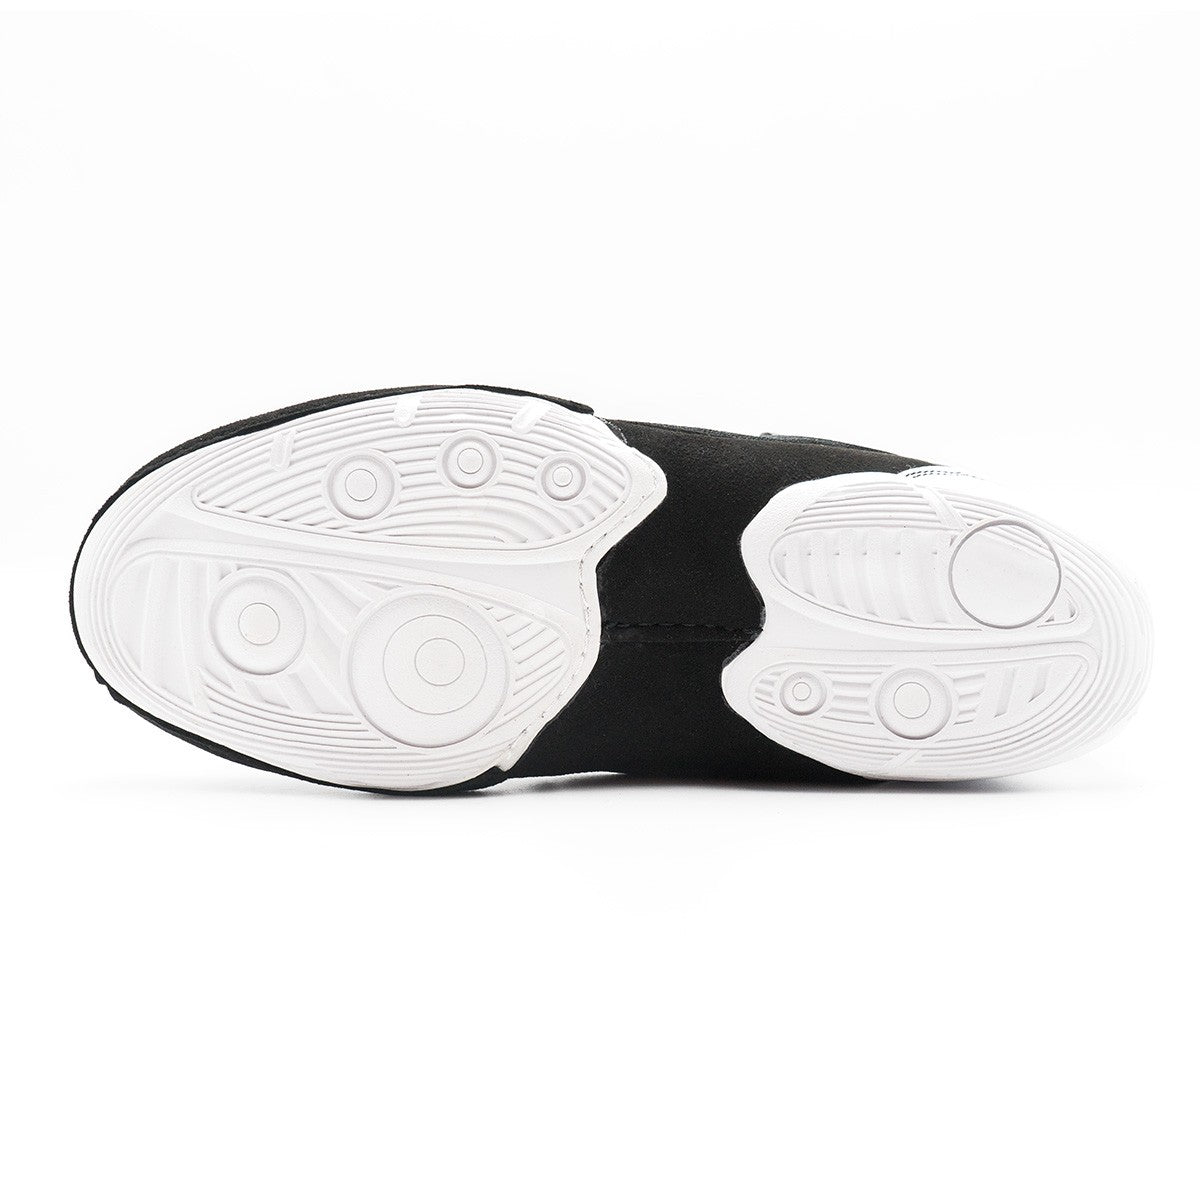 Chaussures de Lutte Fuji Mae Dreamcatcher 3.0 - Noir